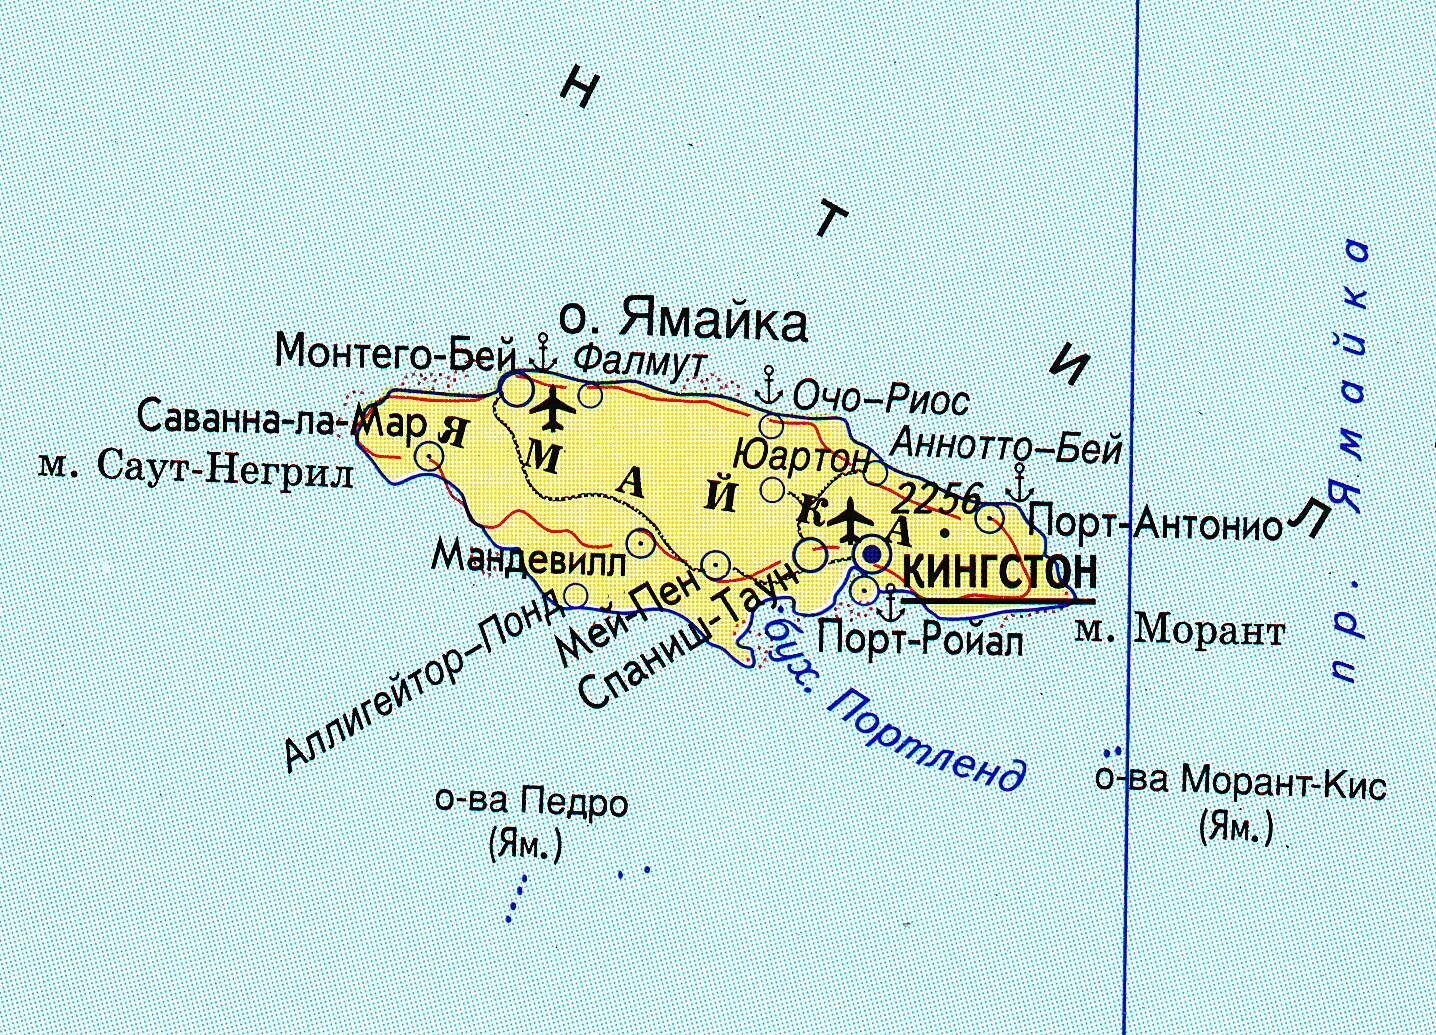 Ямайка на карте. Остров Ямайка на карте. Столица Ямайки на карте. Остров Ямайка на карте Северной Америки. Карта америки ямайка